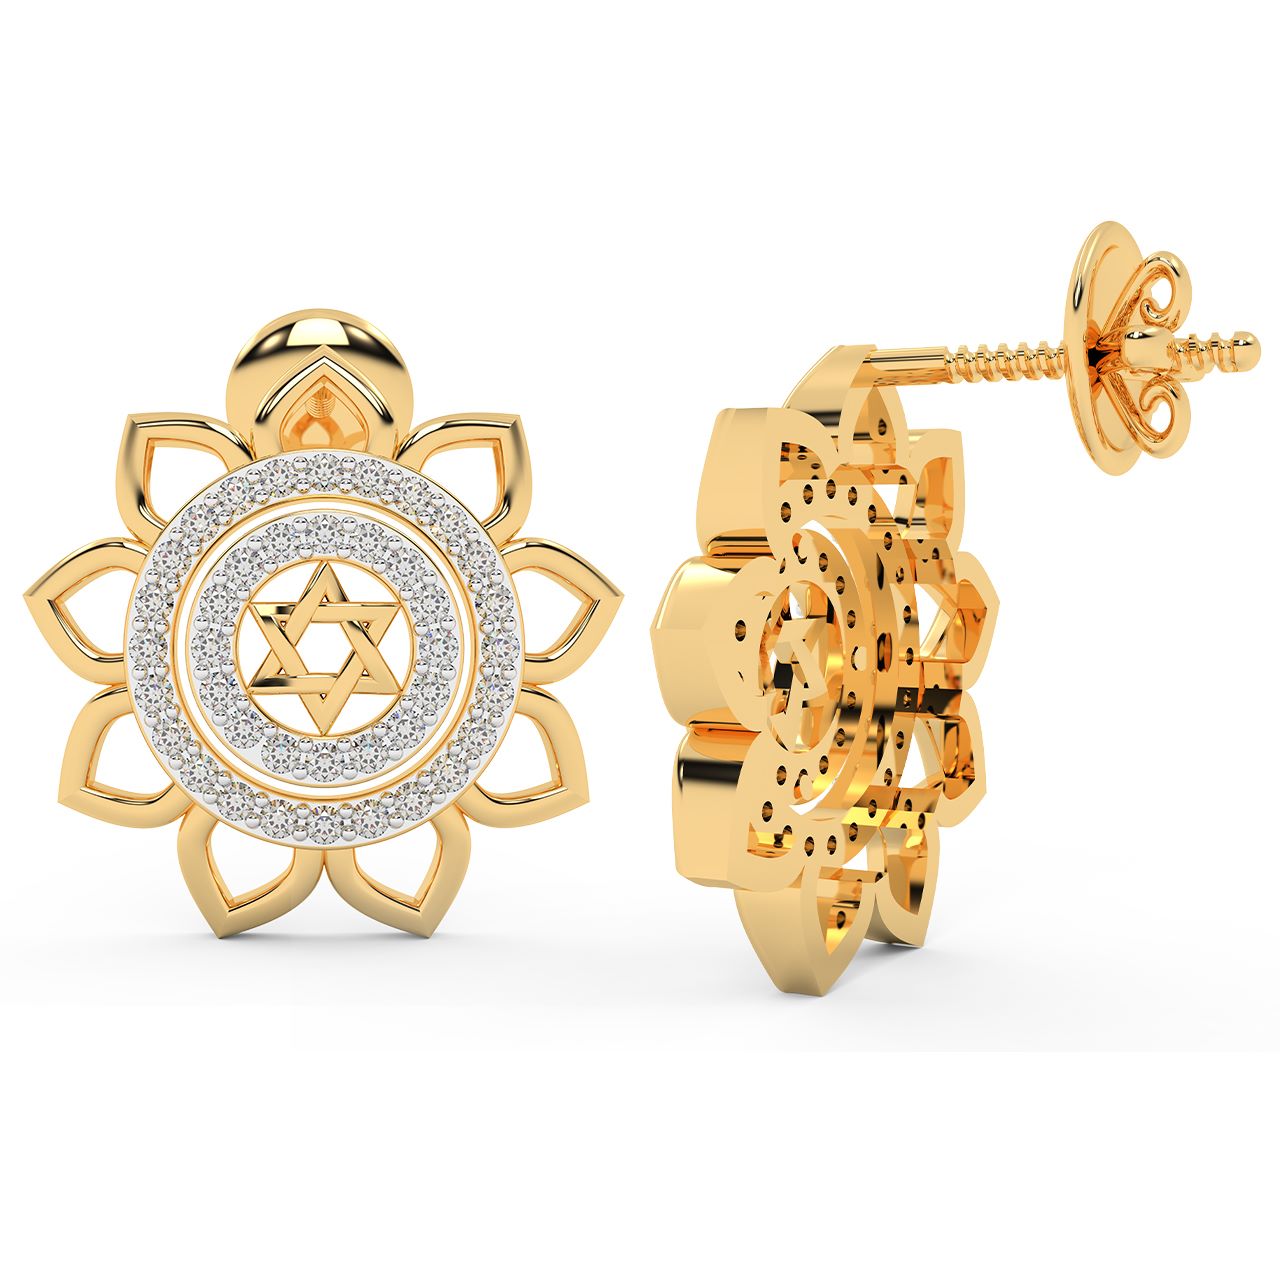 IntricaFlower Design Diamond Earrings